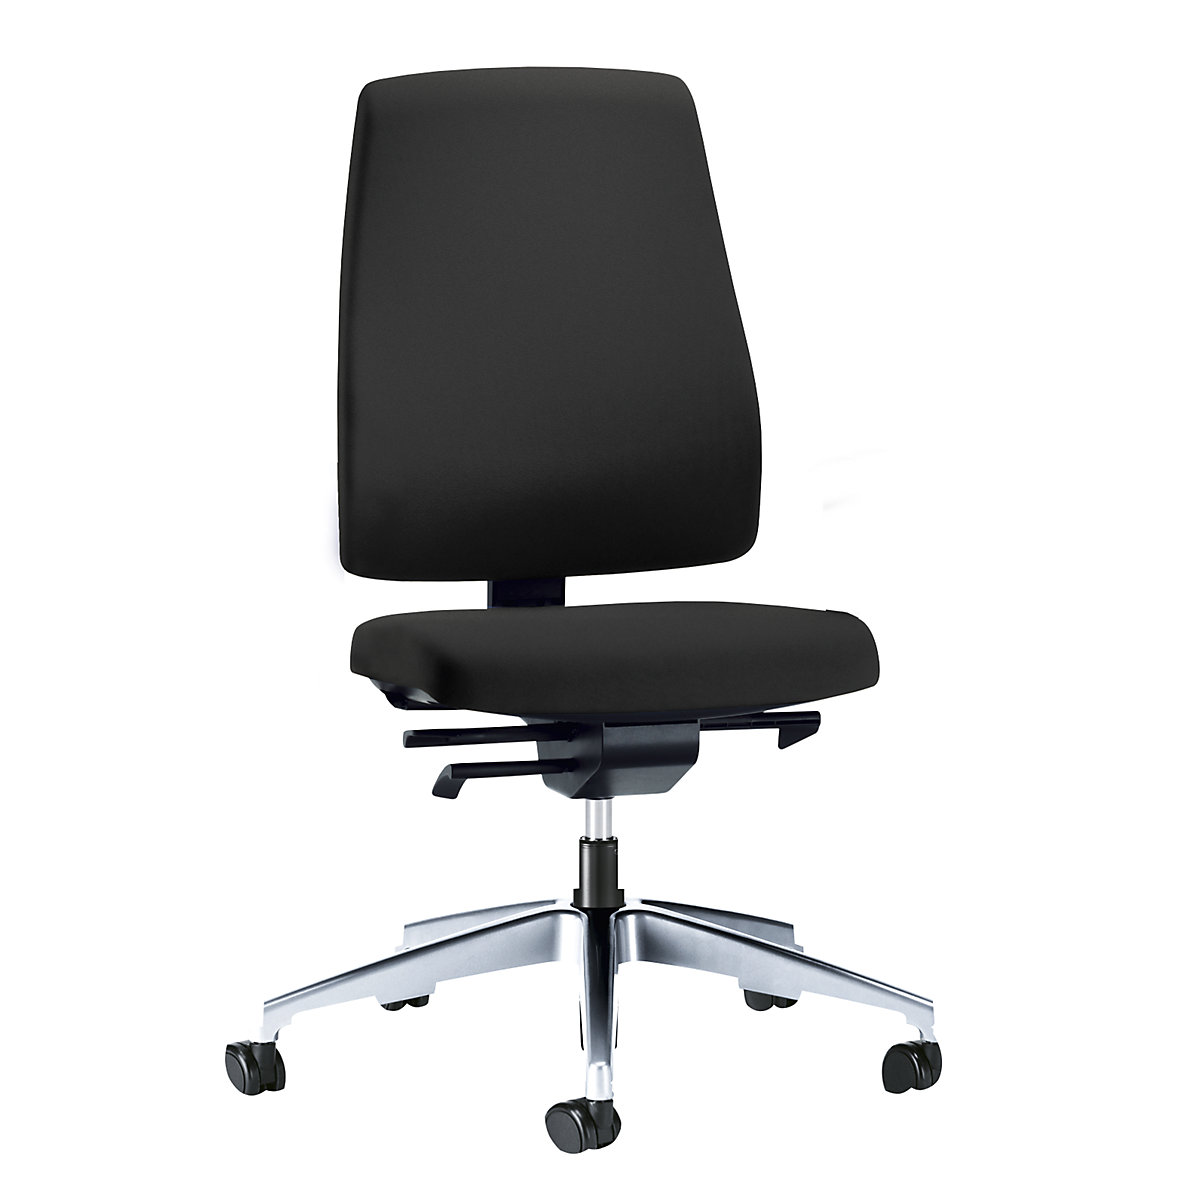 GOAL office swivel chair, back rest height 530 mm - interstuhl